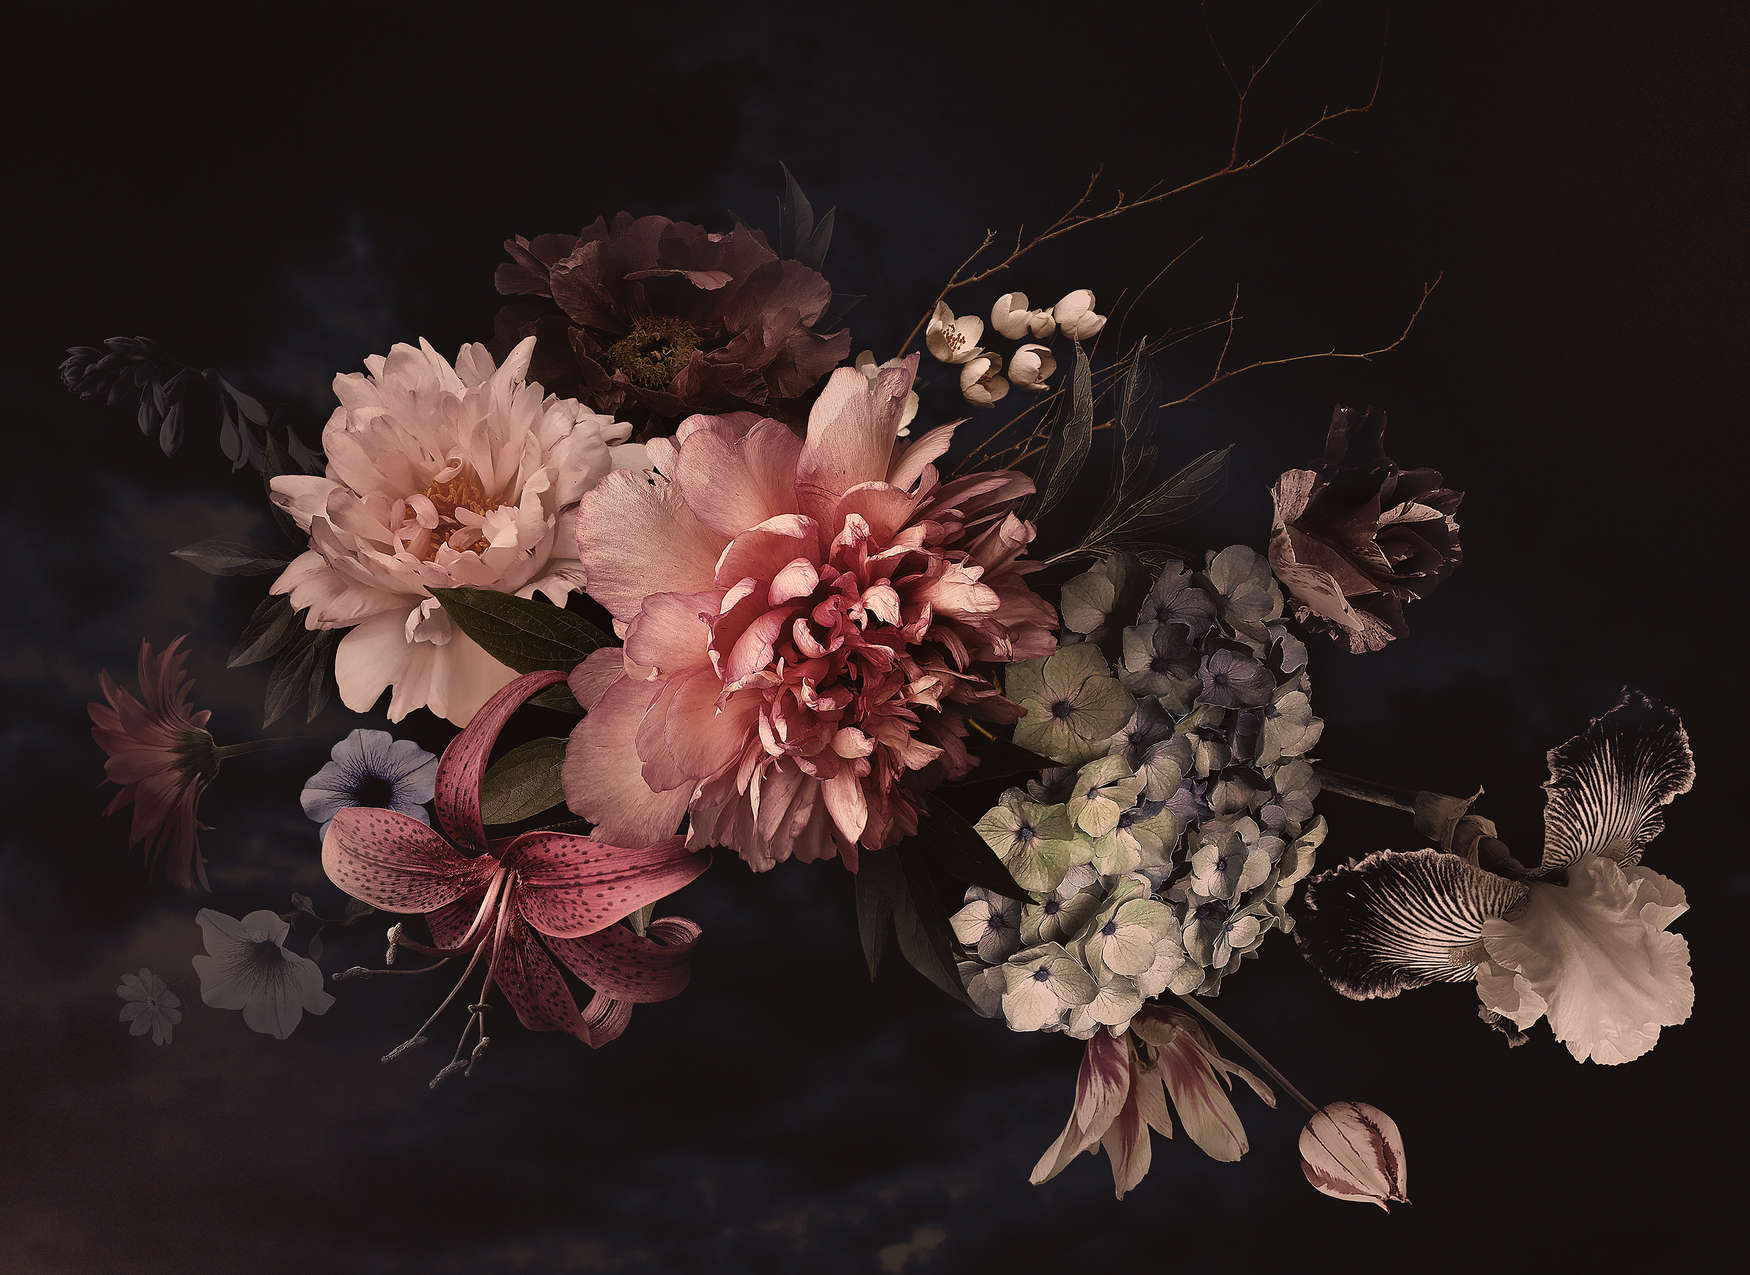             Bouquet in stile botanico - Rosa, Nero
        